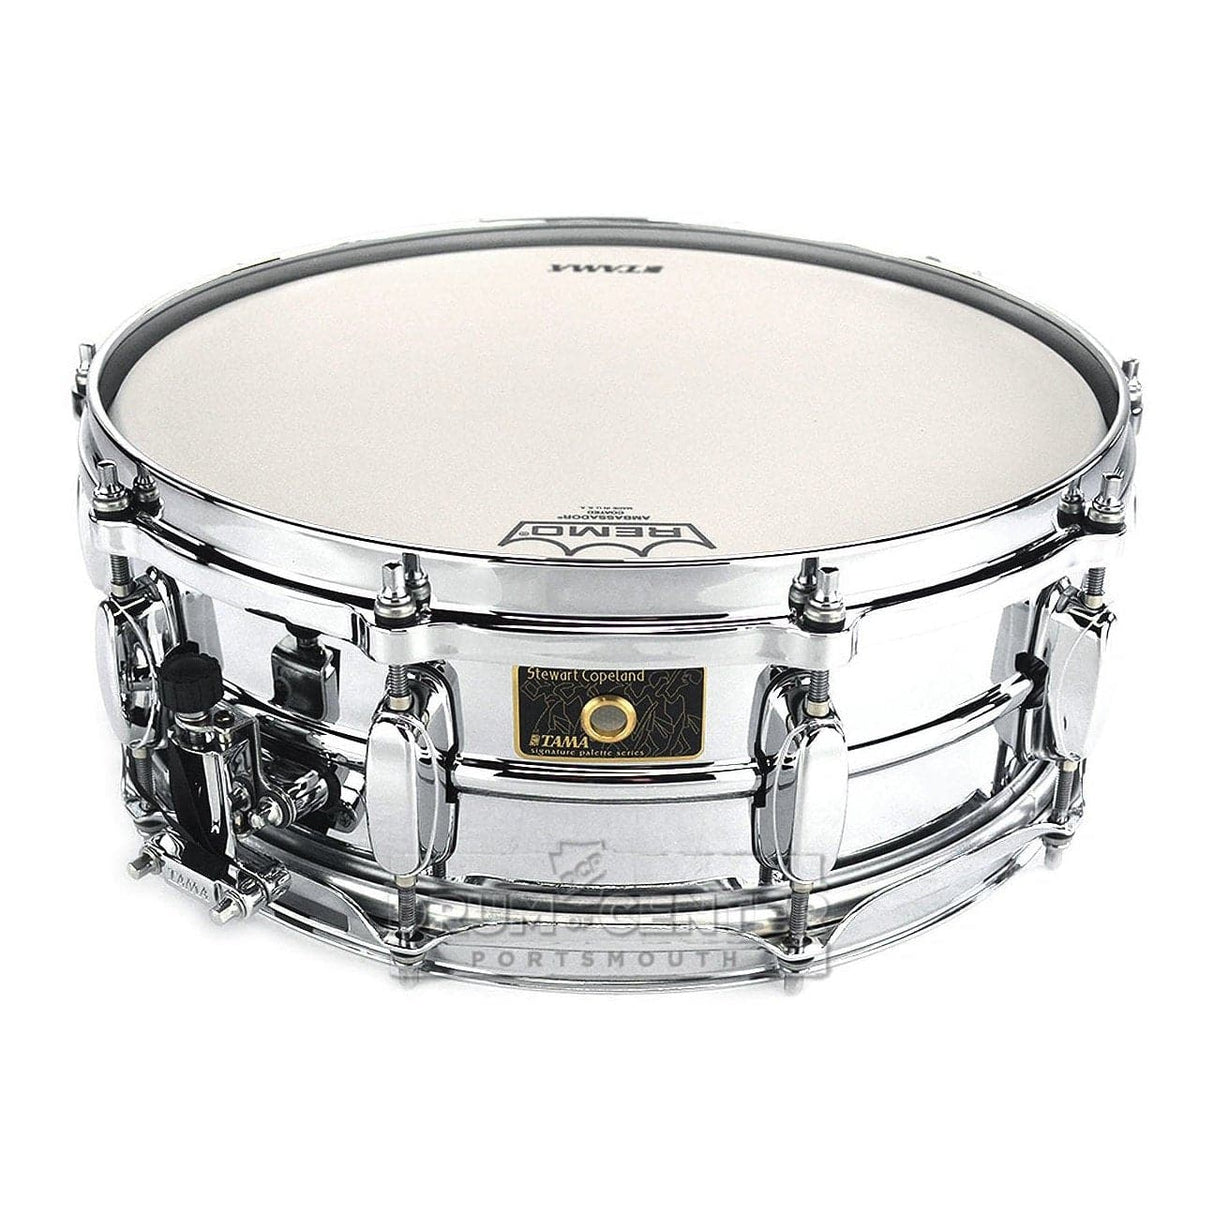 Tama Signature Series Snare Drum Stewart Copeland 14x5